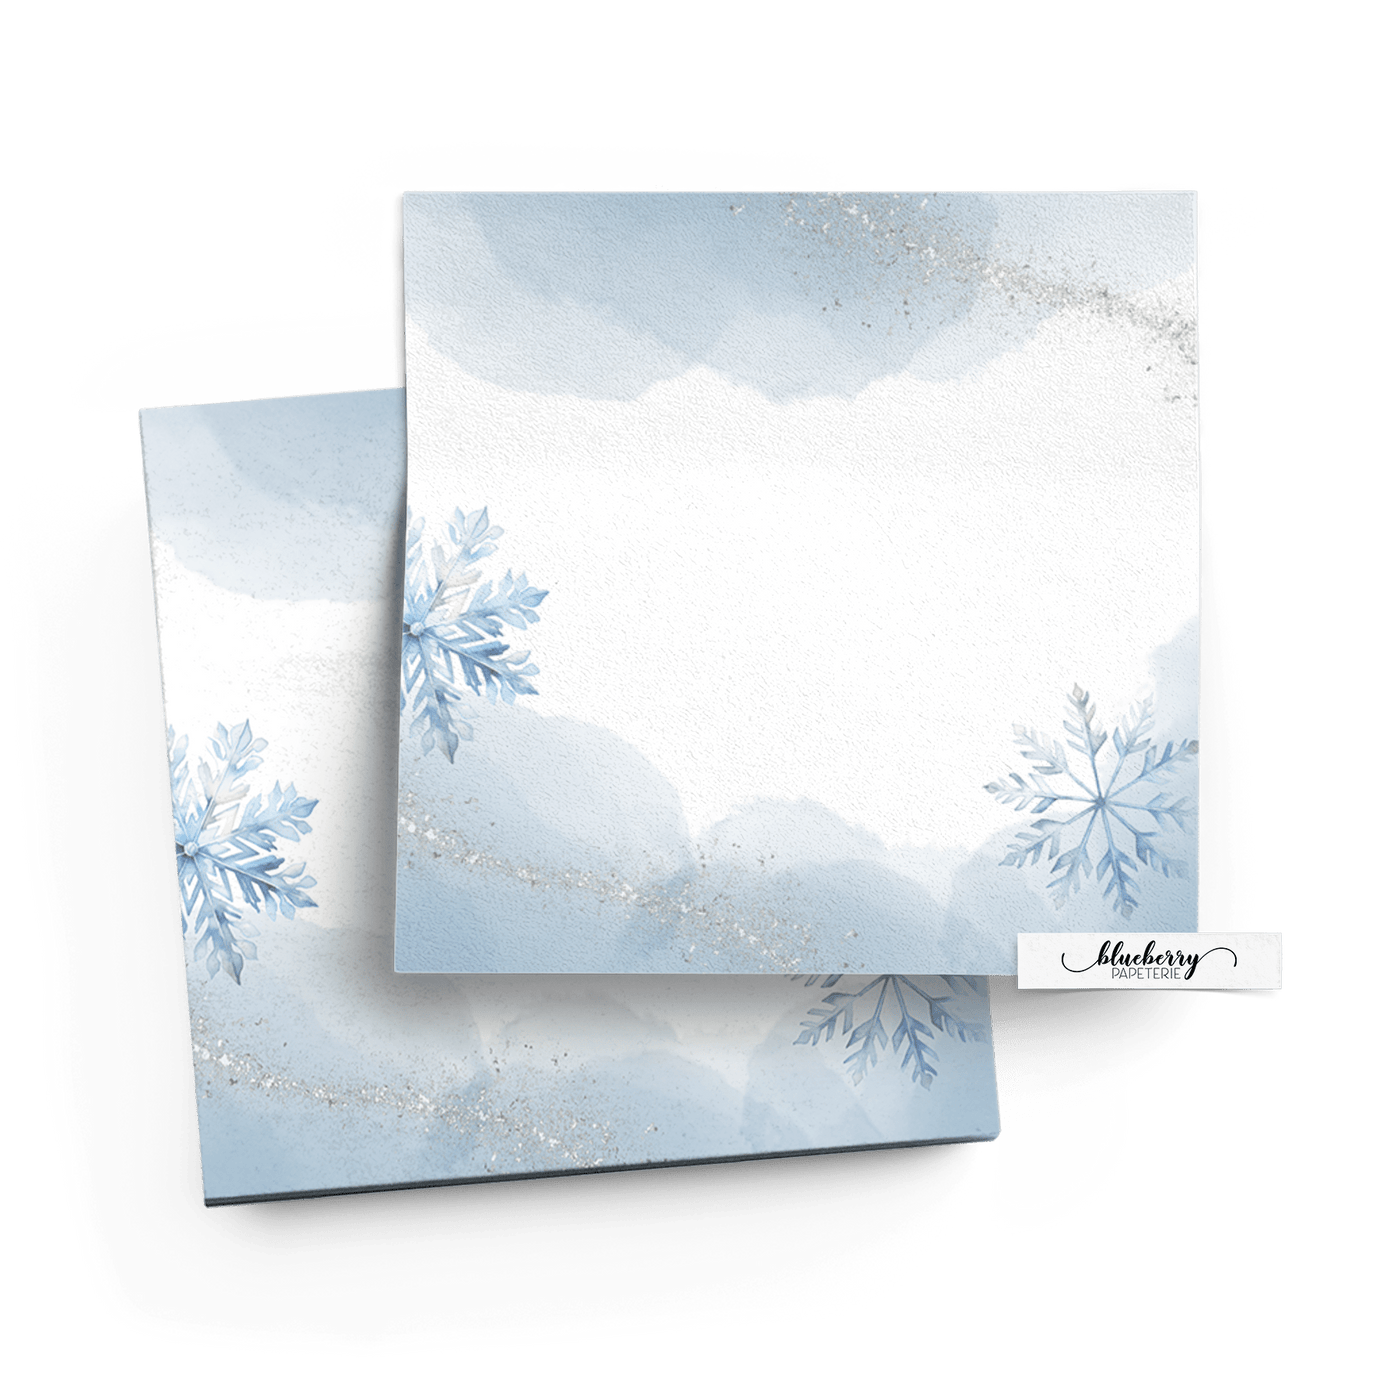 Bloc note autocollant - Charme hivernal - Blueberry Papeterie